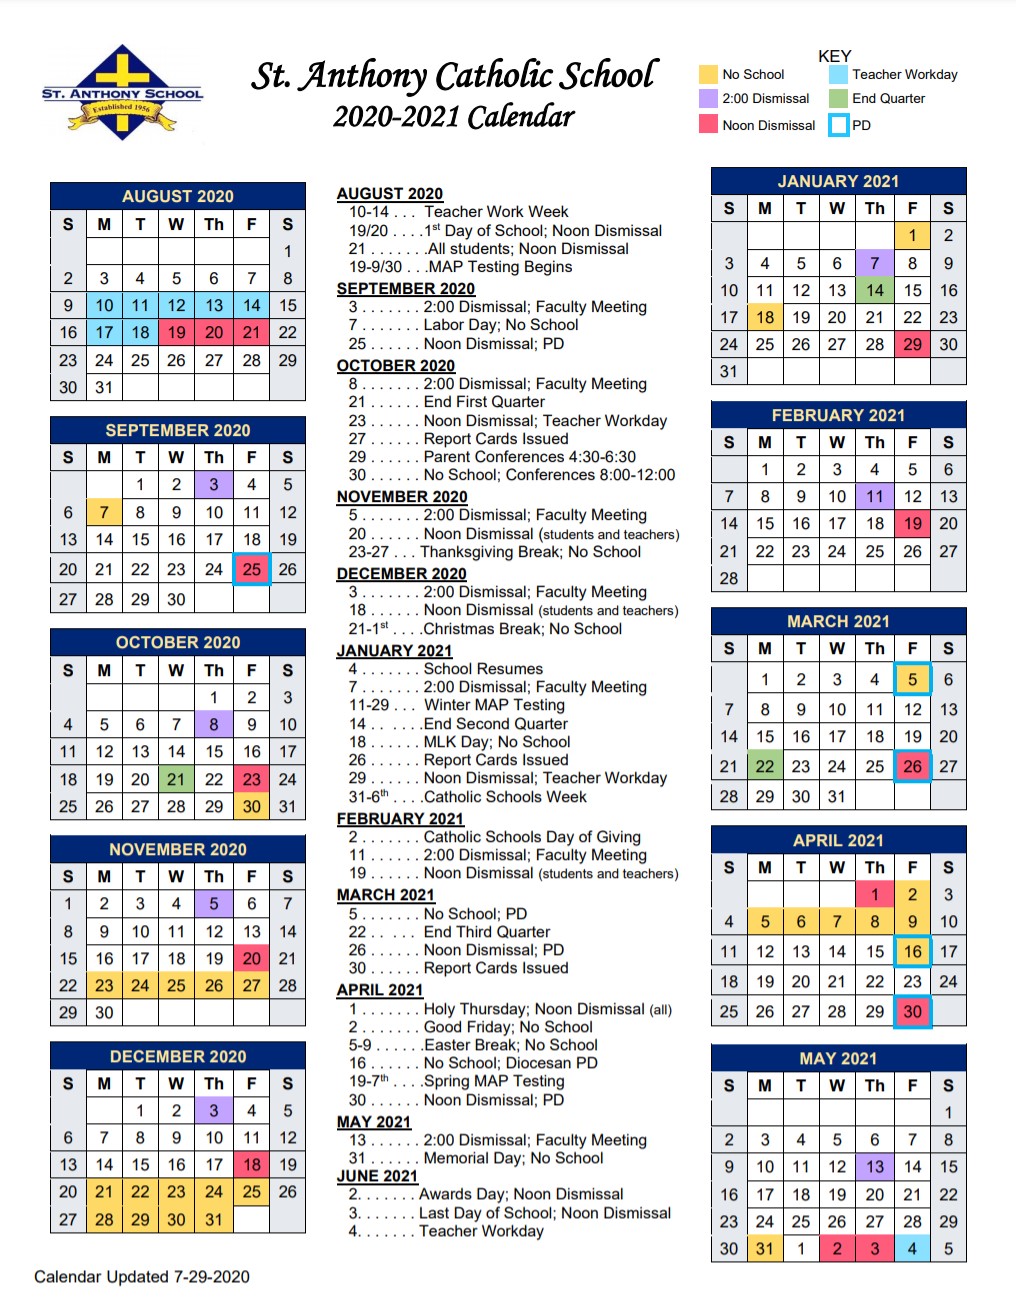 Academic Calendar - St. Anthony Catholic School